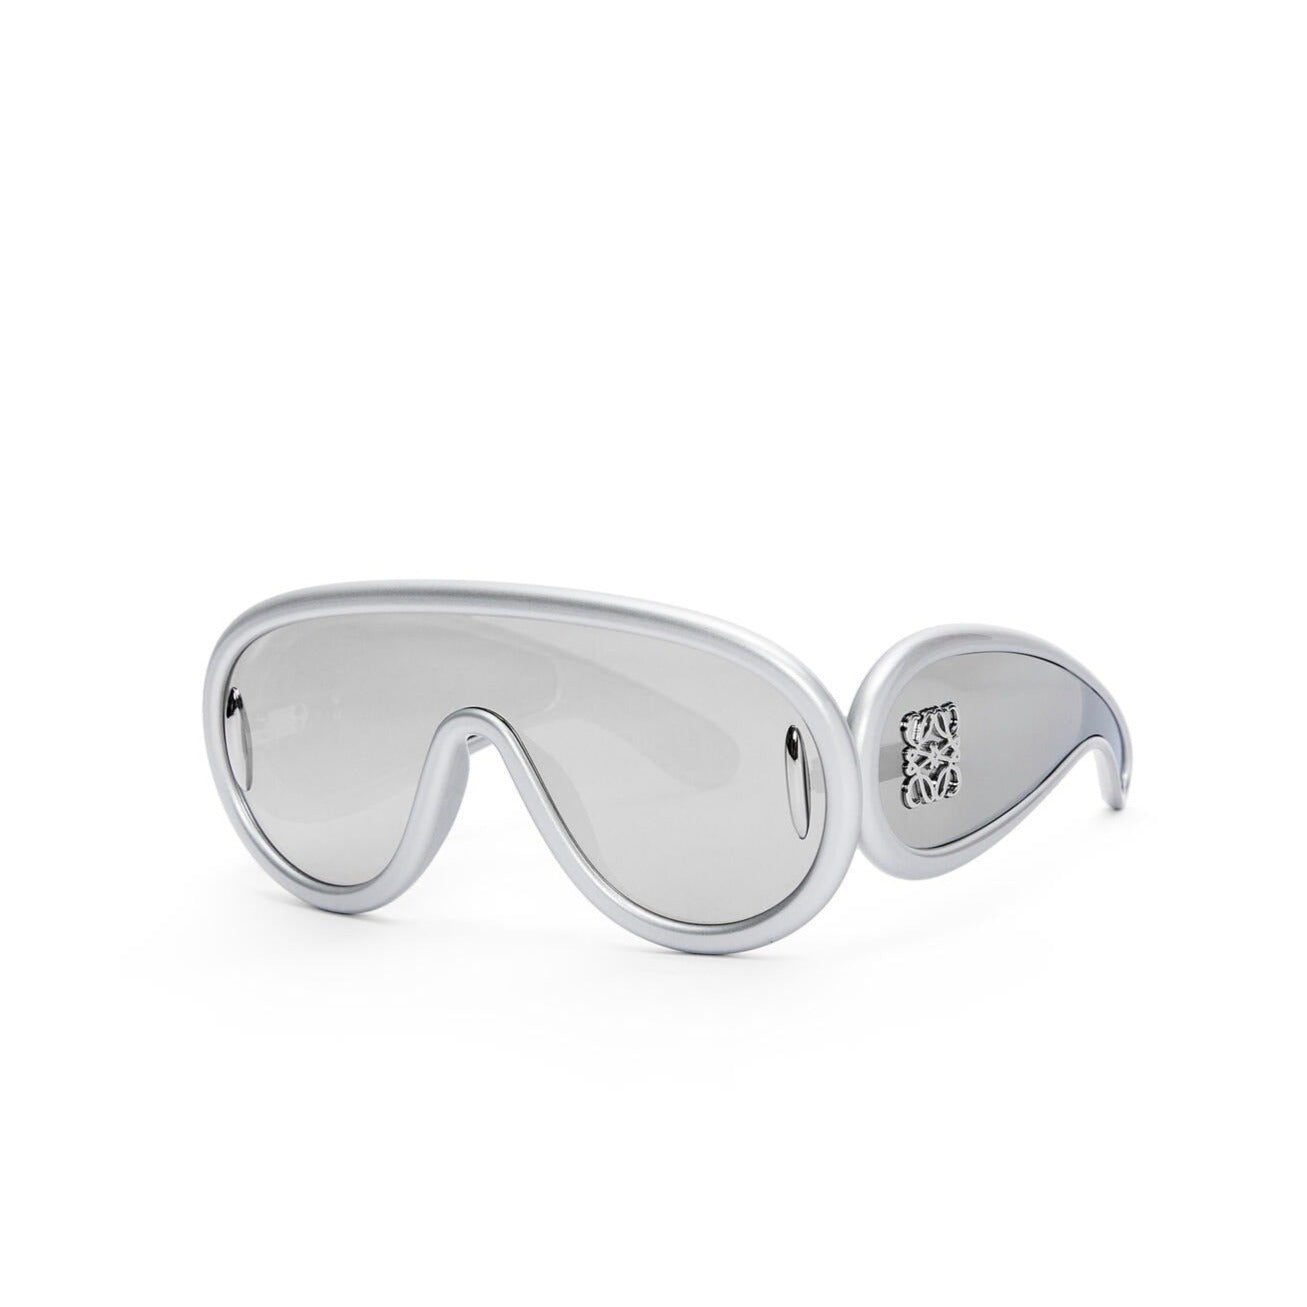 Wave Mask Sunglasses